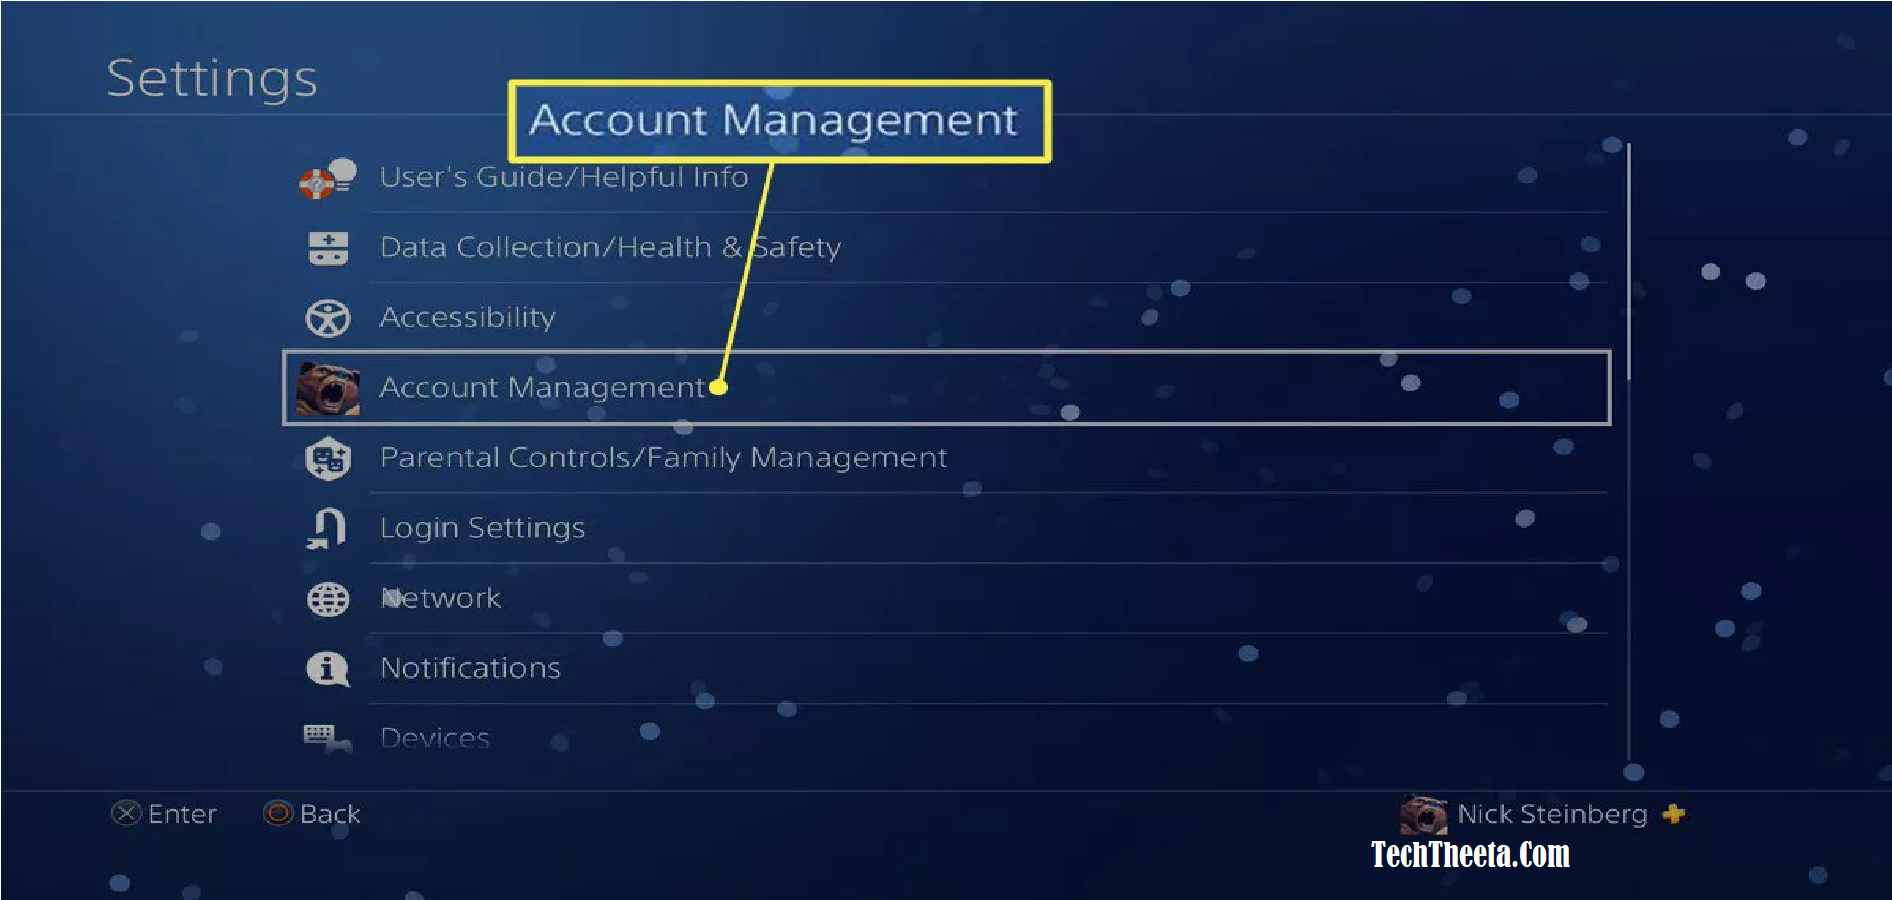 Account Managment